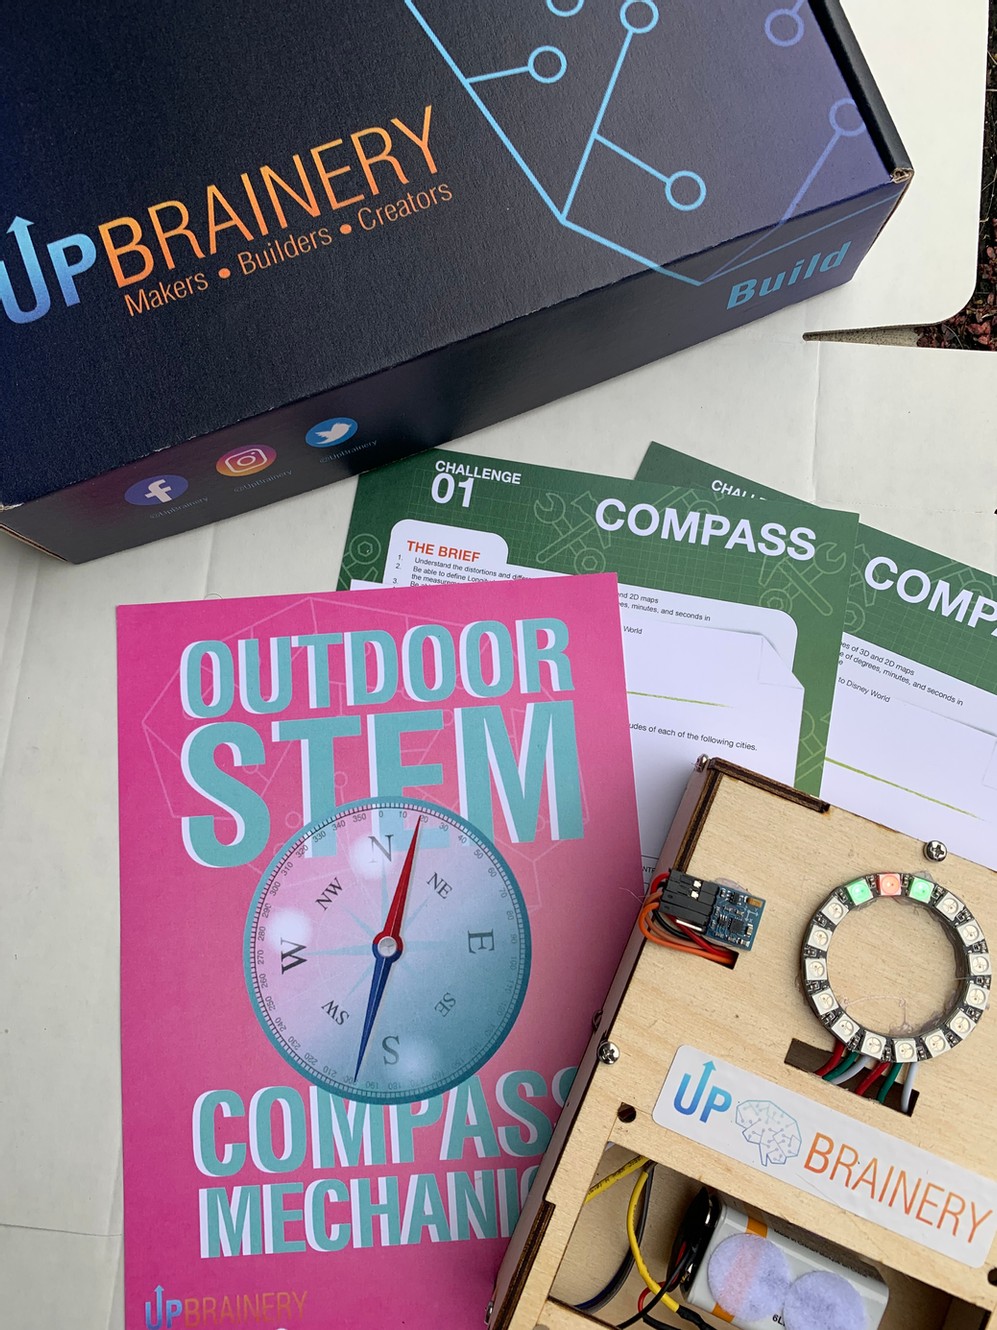 Educational Kits For Kids Near Me | UpBrainery